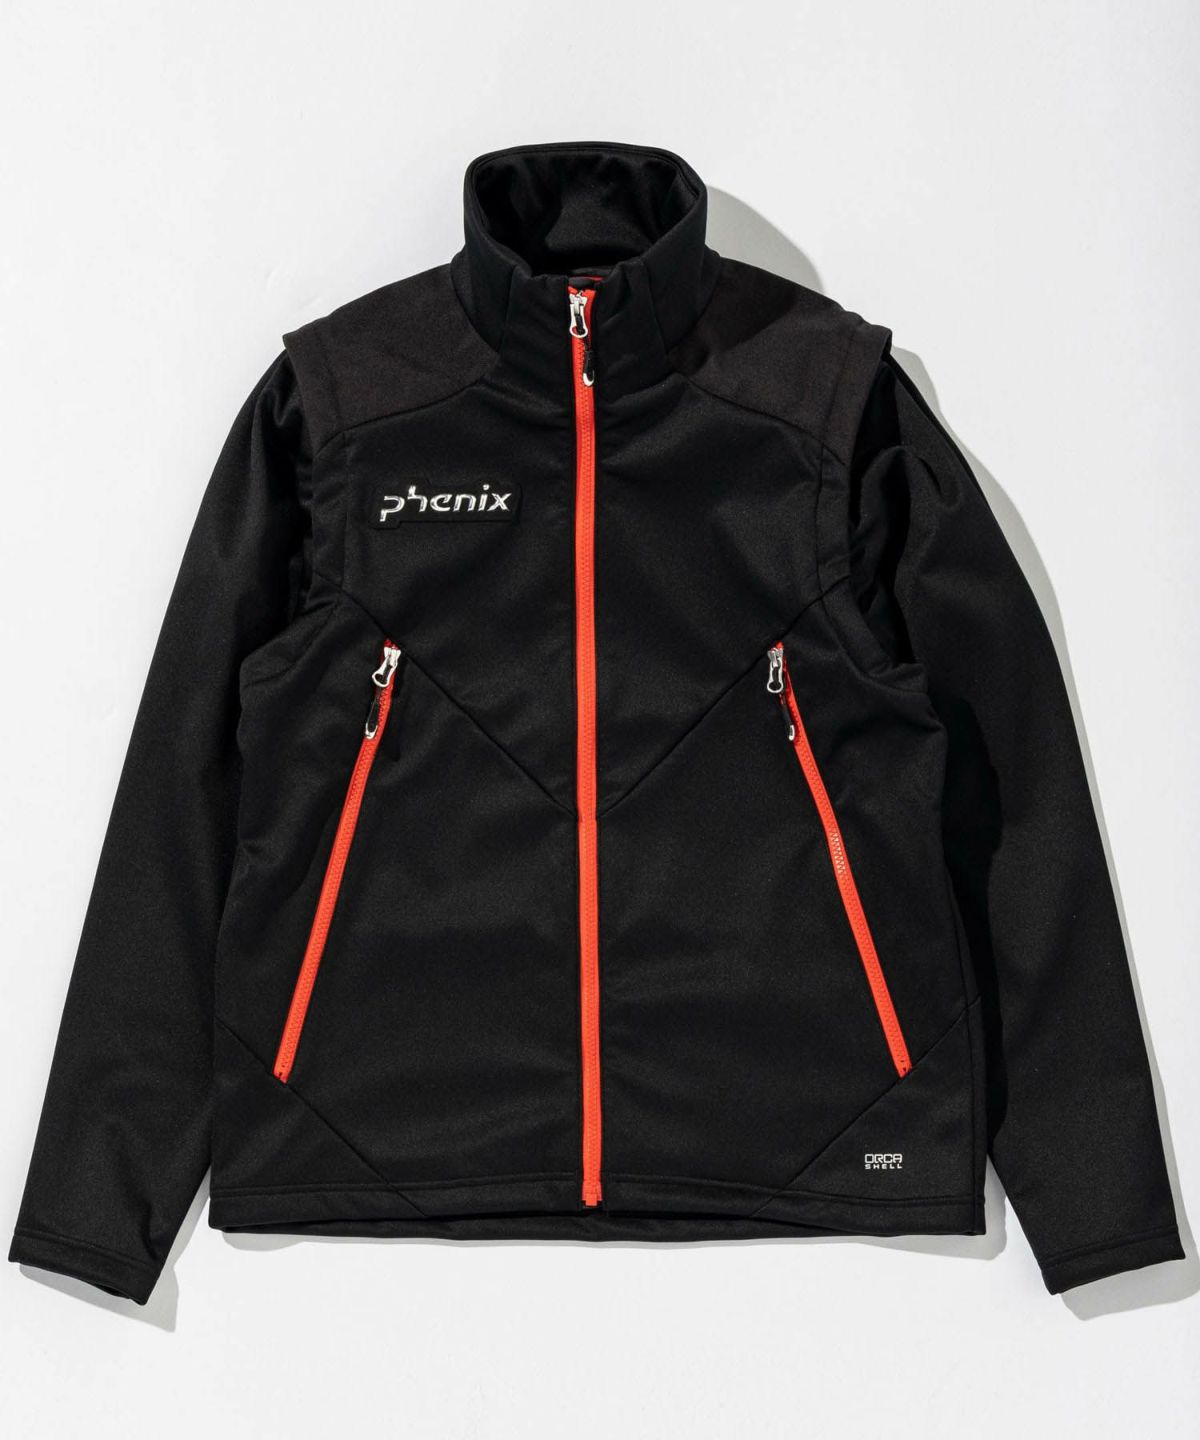 phenix(フェニックス)Phenix Team Soft Shell Jacket メンズ/スキー ...